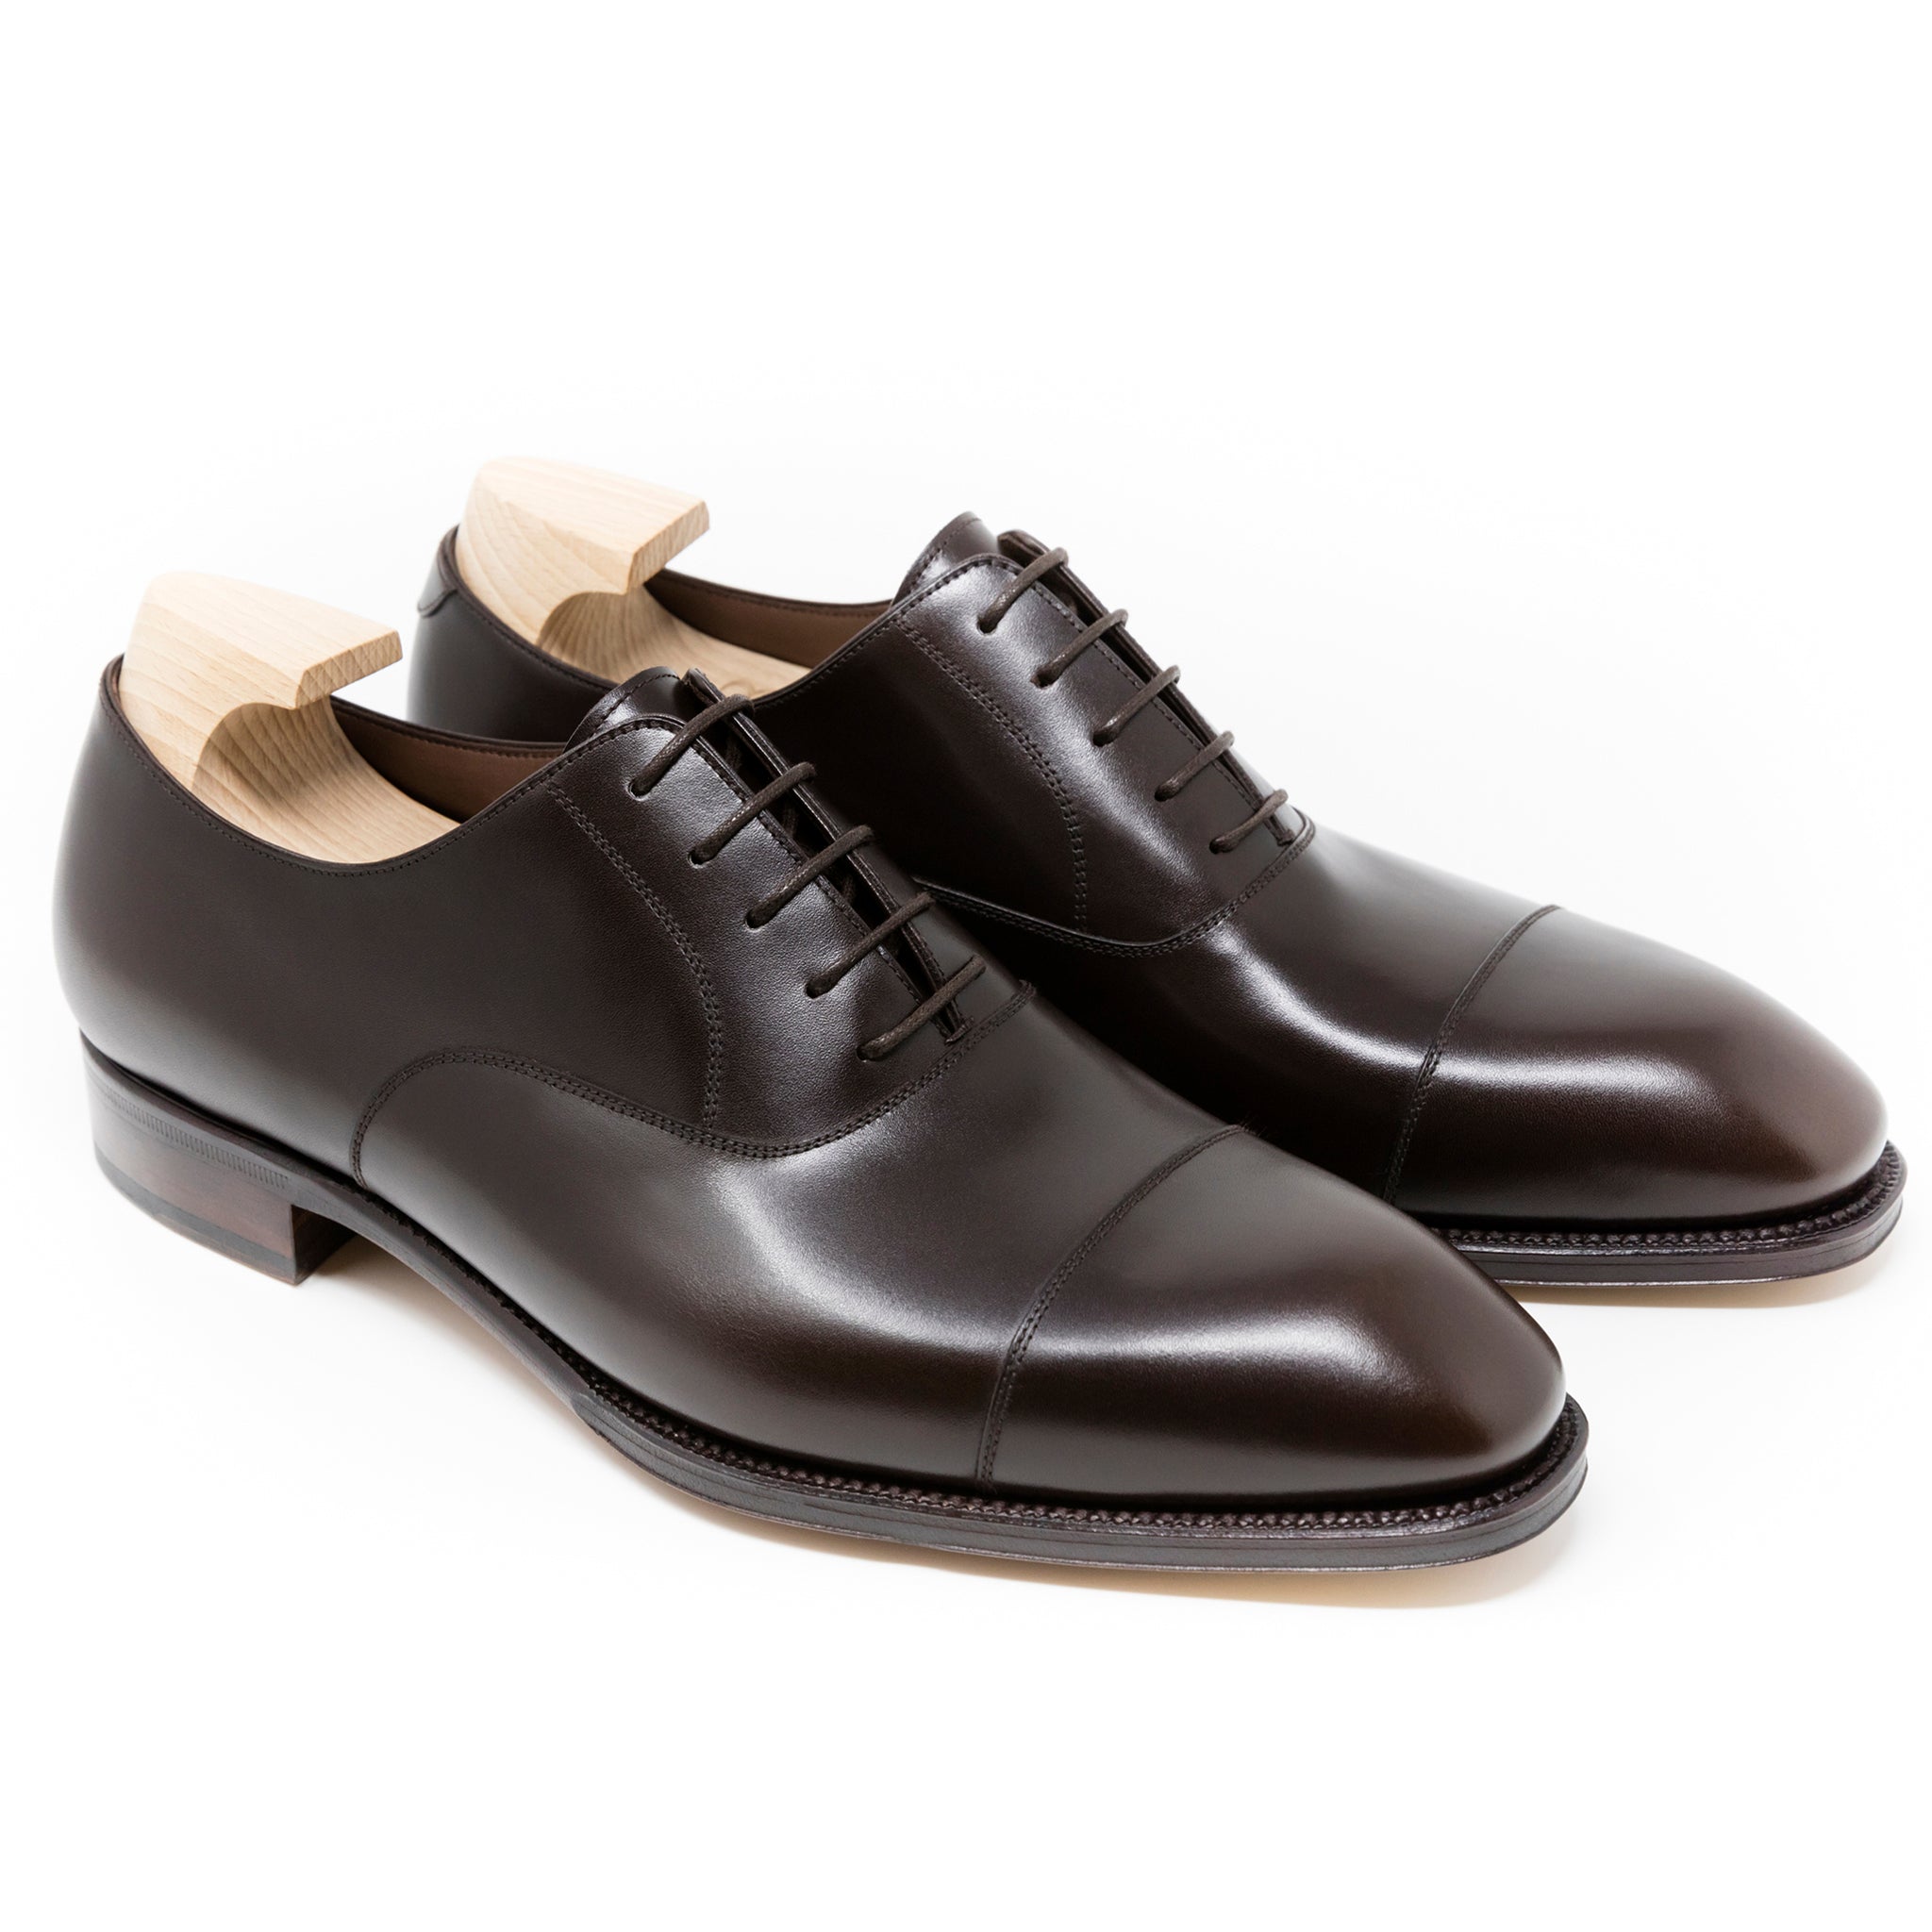 TLB Mallorca Oxford shoes| Men's Oxford shoes | model Alan boxcalf ...